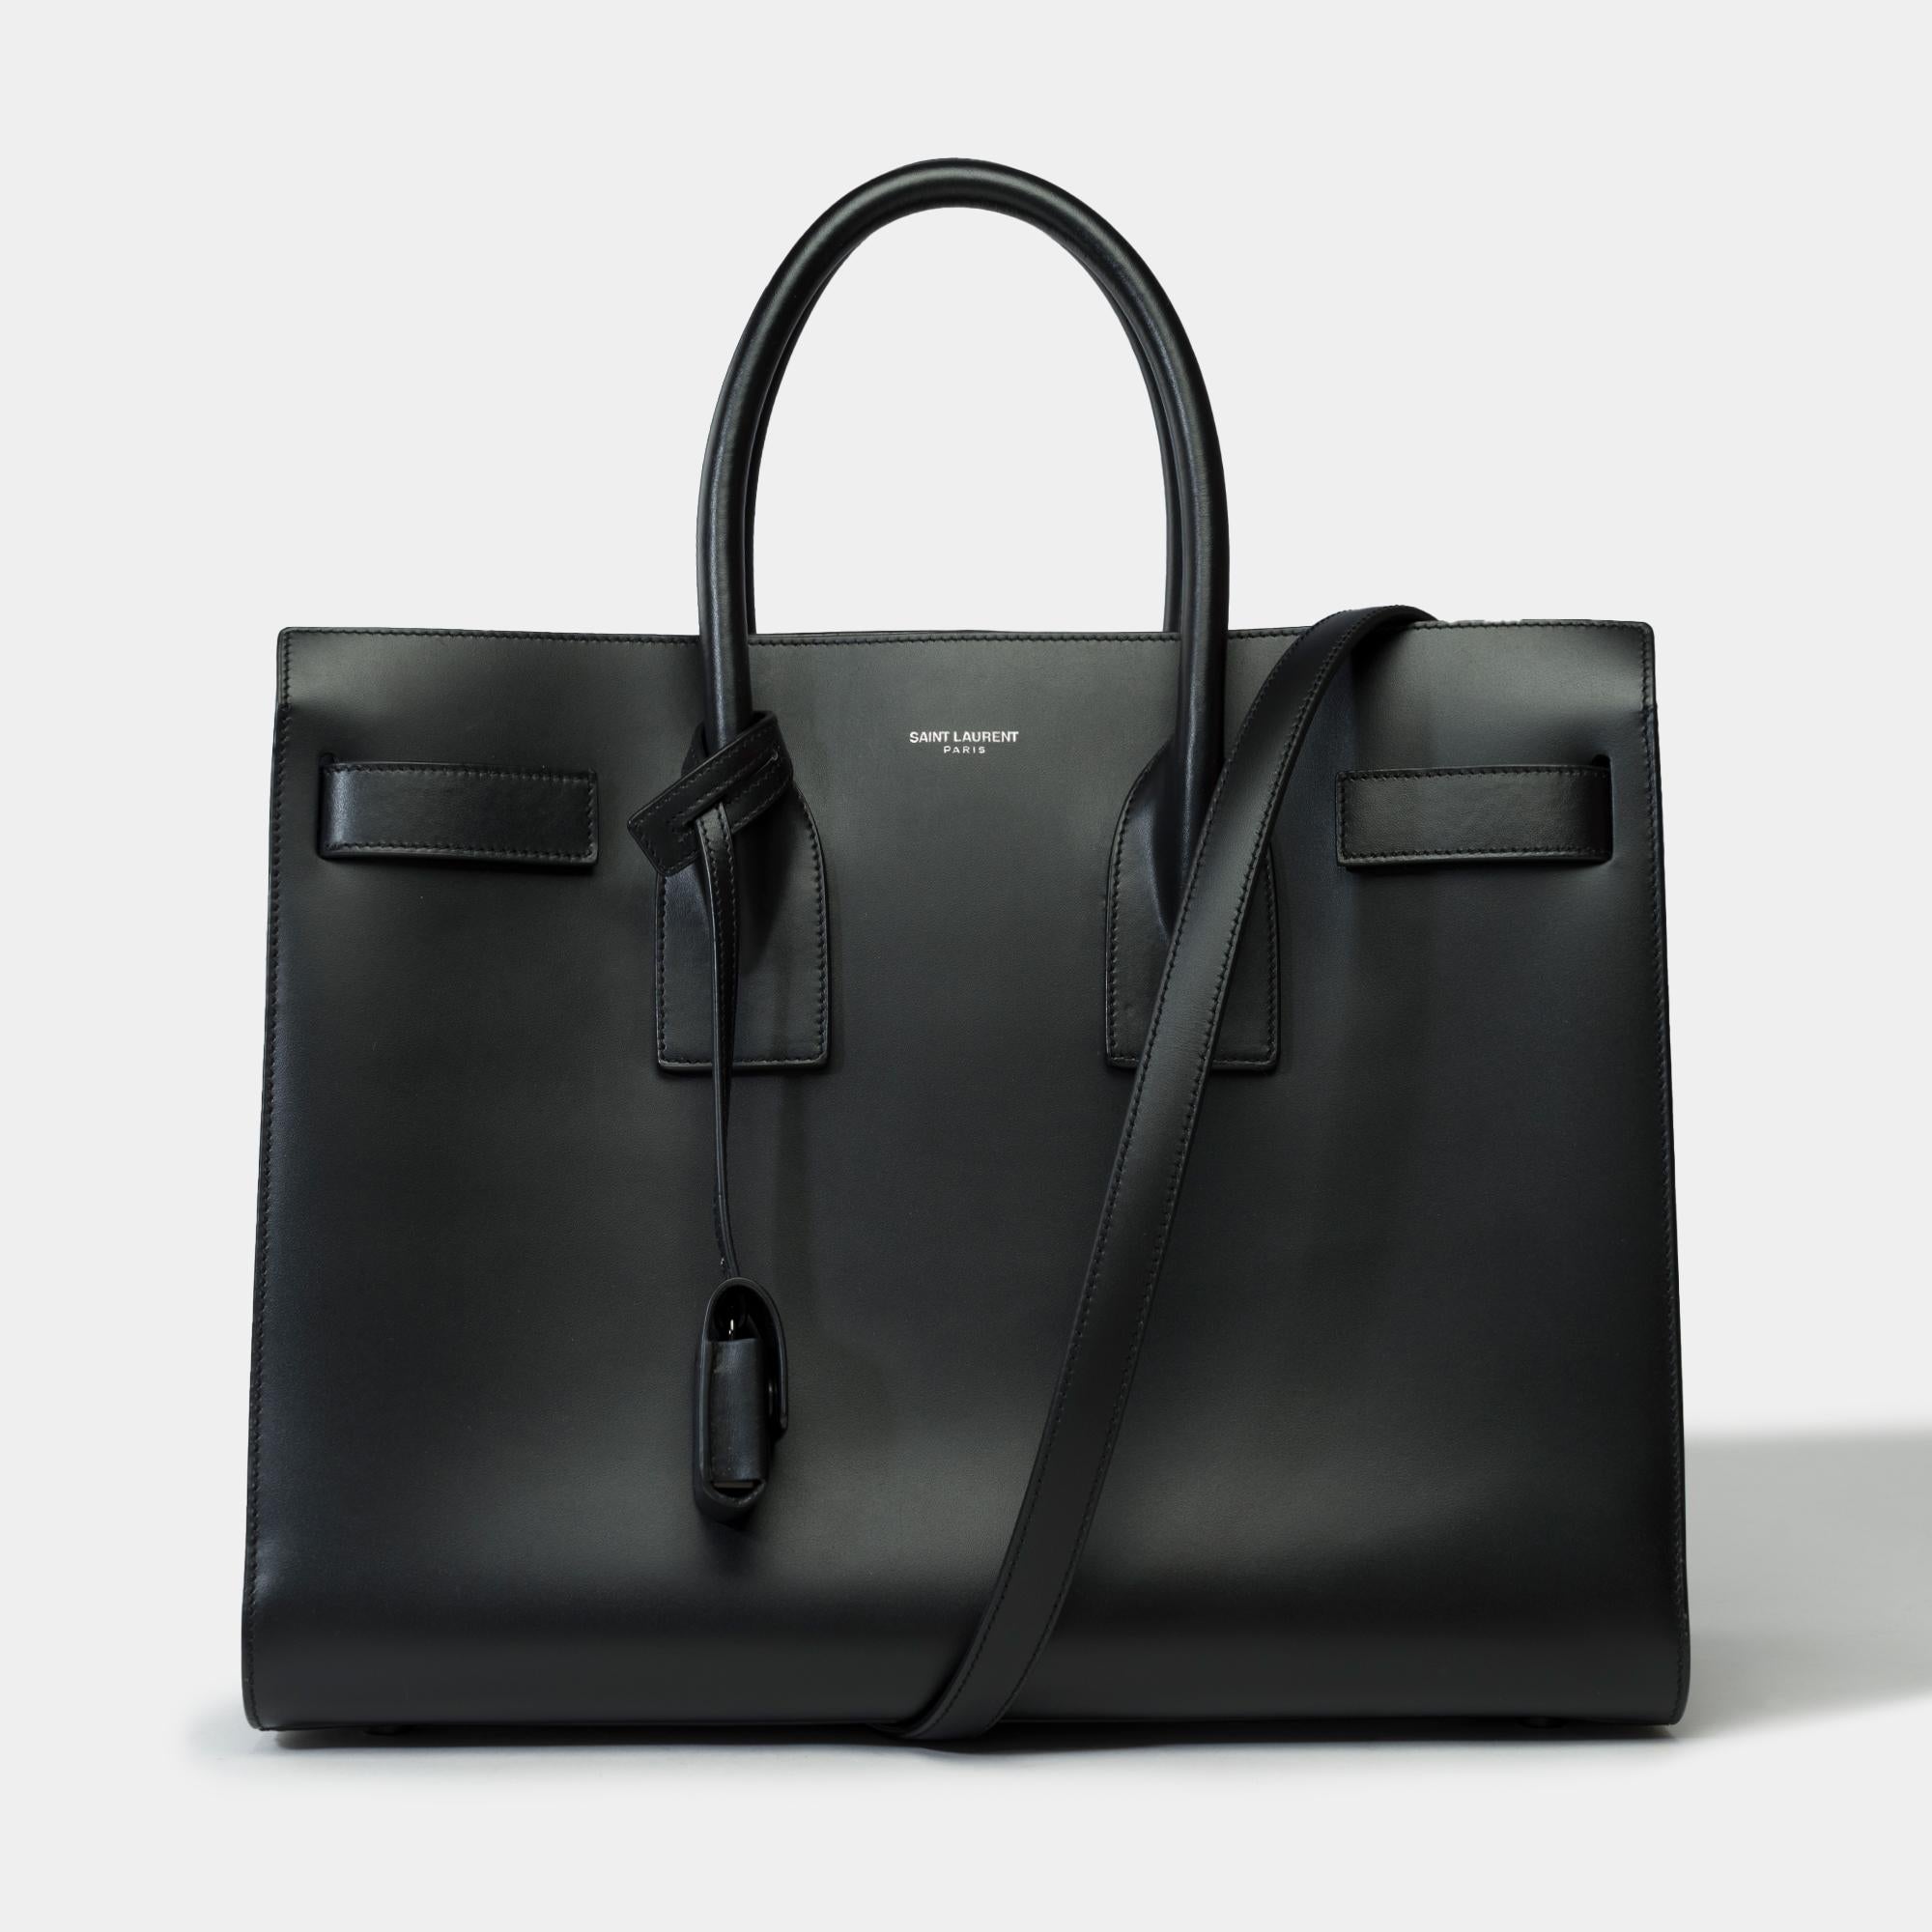 Saint Laurent Sac de Jour Small size handbag strap in black Box calf leather In Excellent Condition For Sale In Paris, IDF